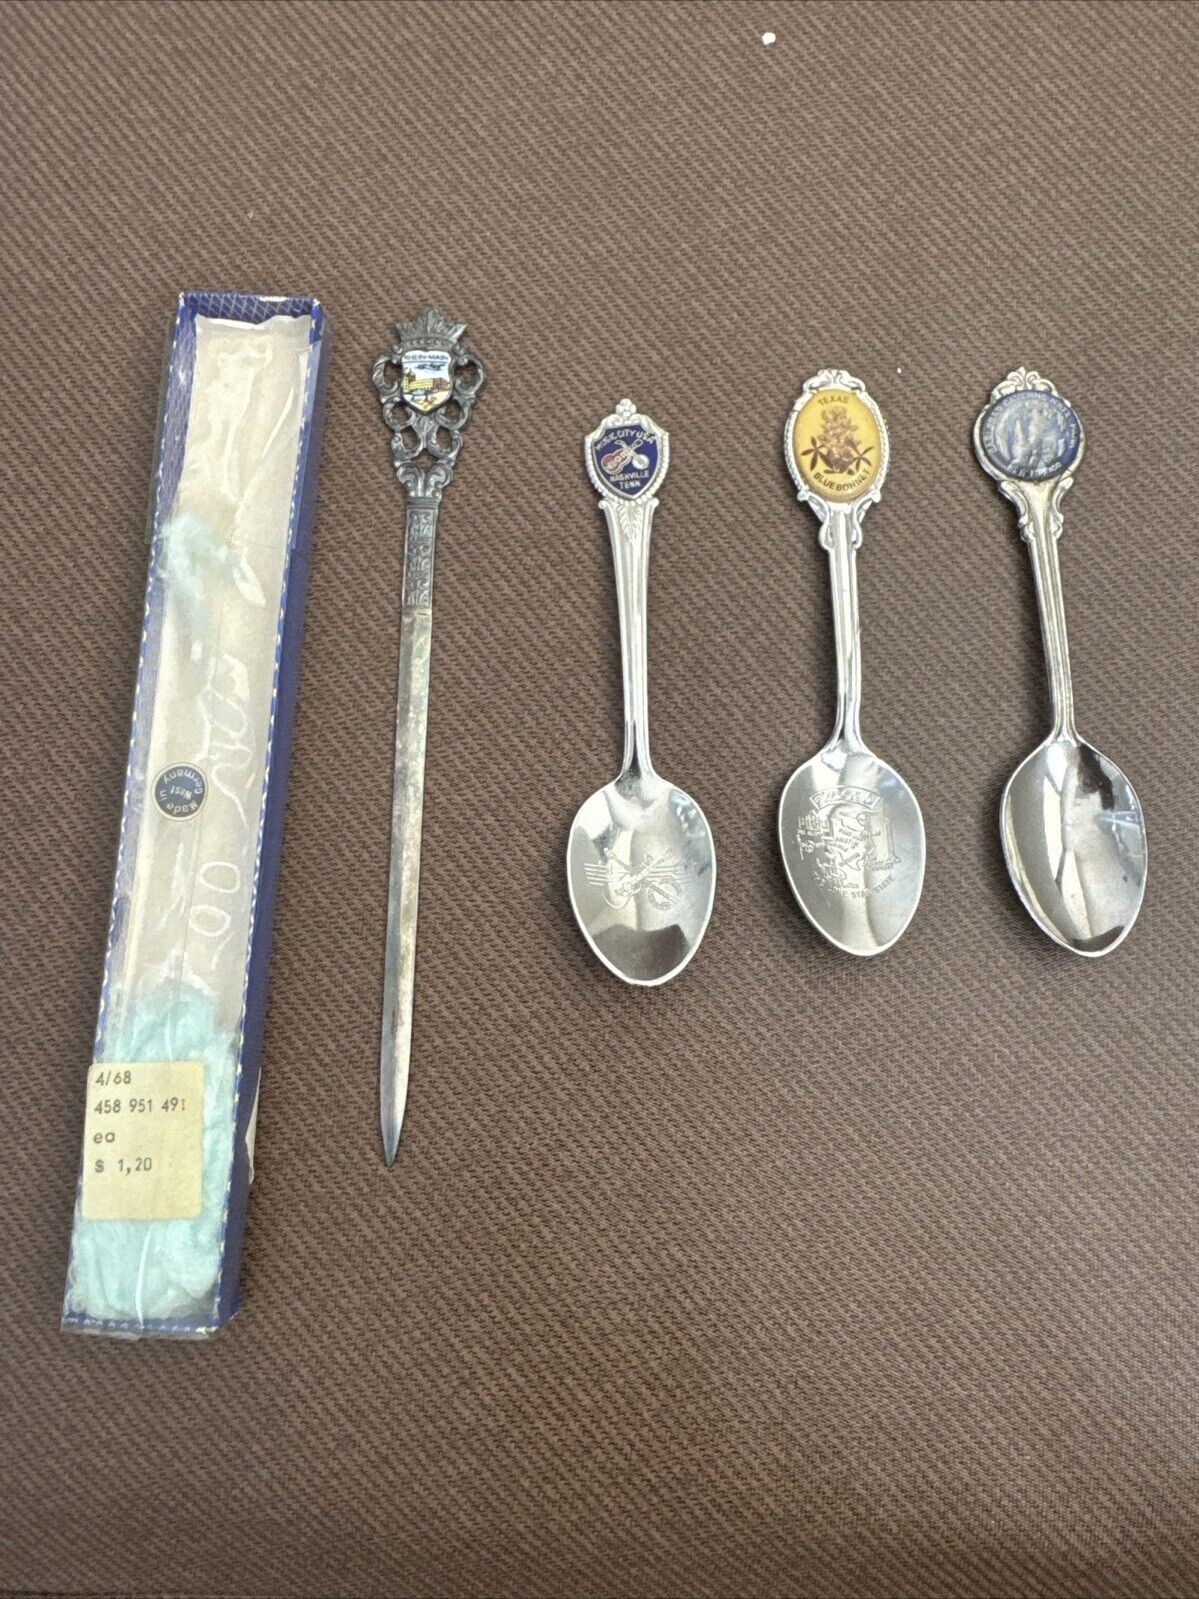 Vintage  souvenir spoons (lot of 3) and Vintage Letter Opener